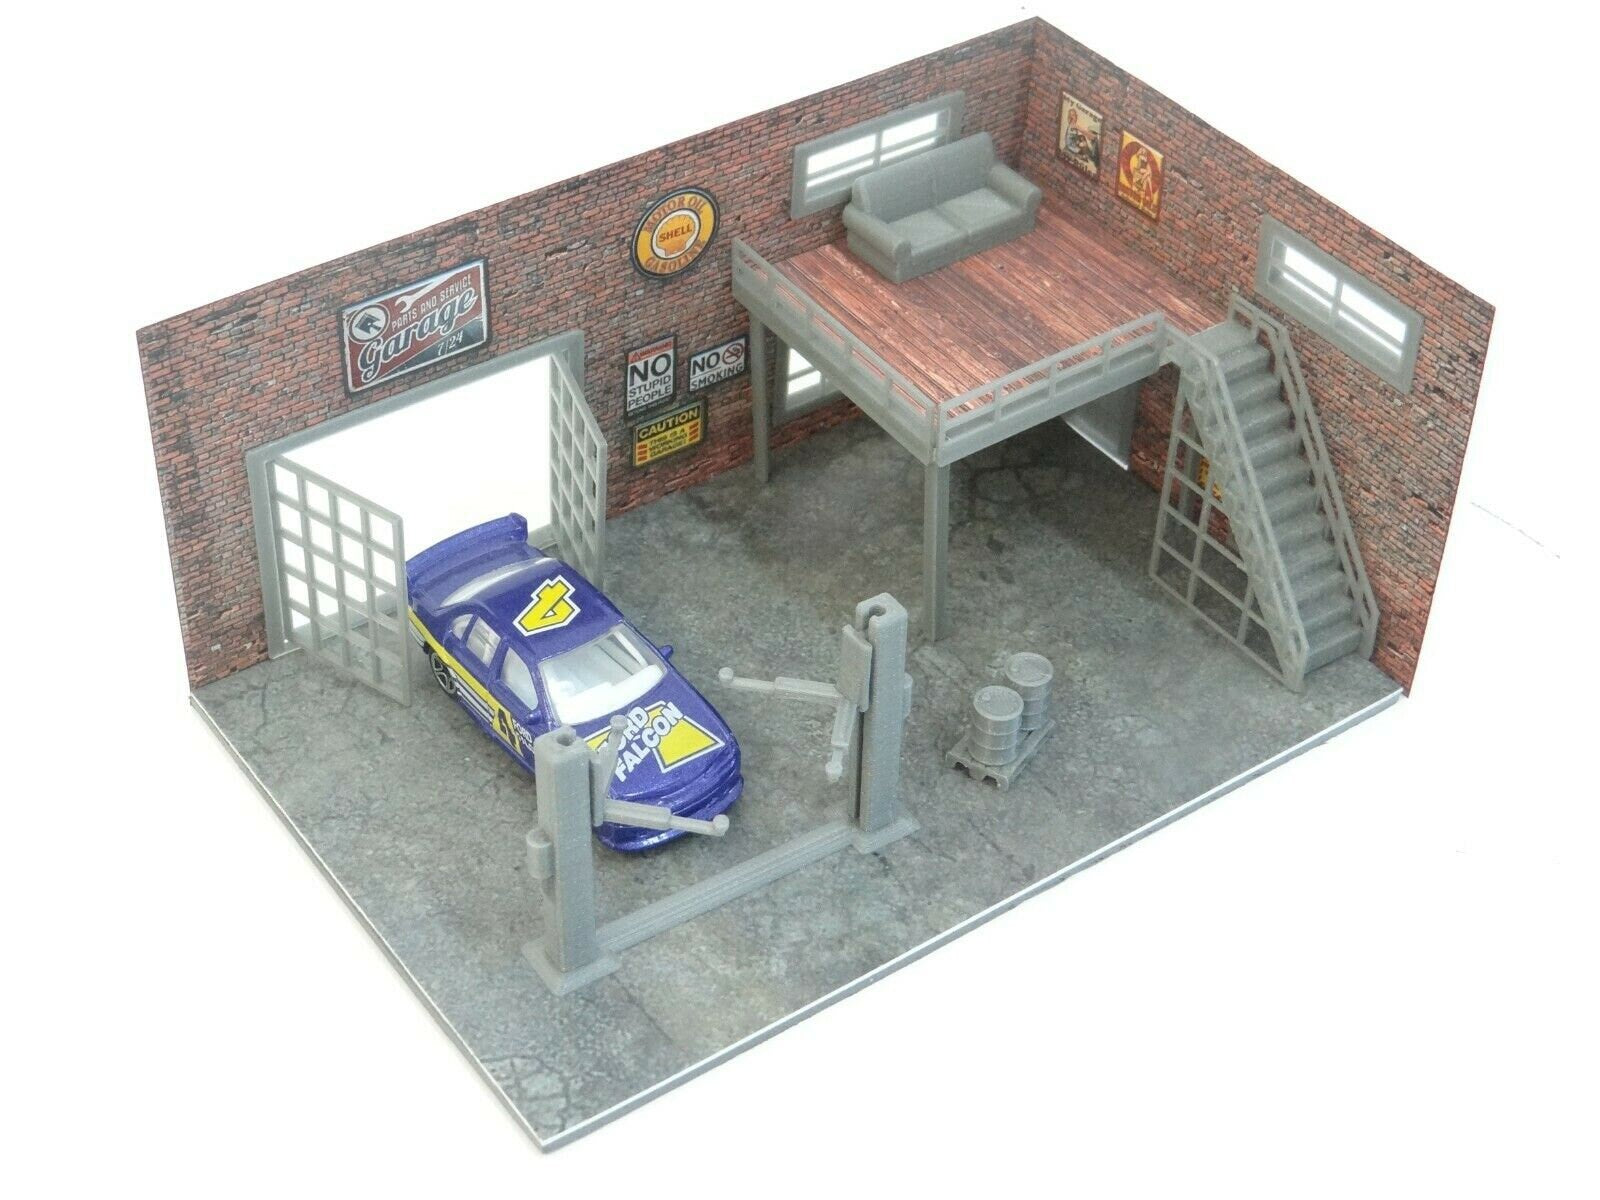 Scale 1:60 / 64 Diorama brick garage display Car service Diorama model kit